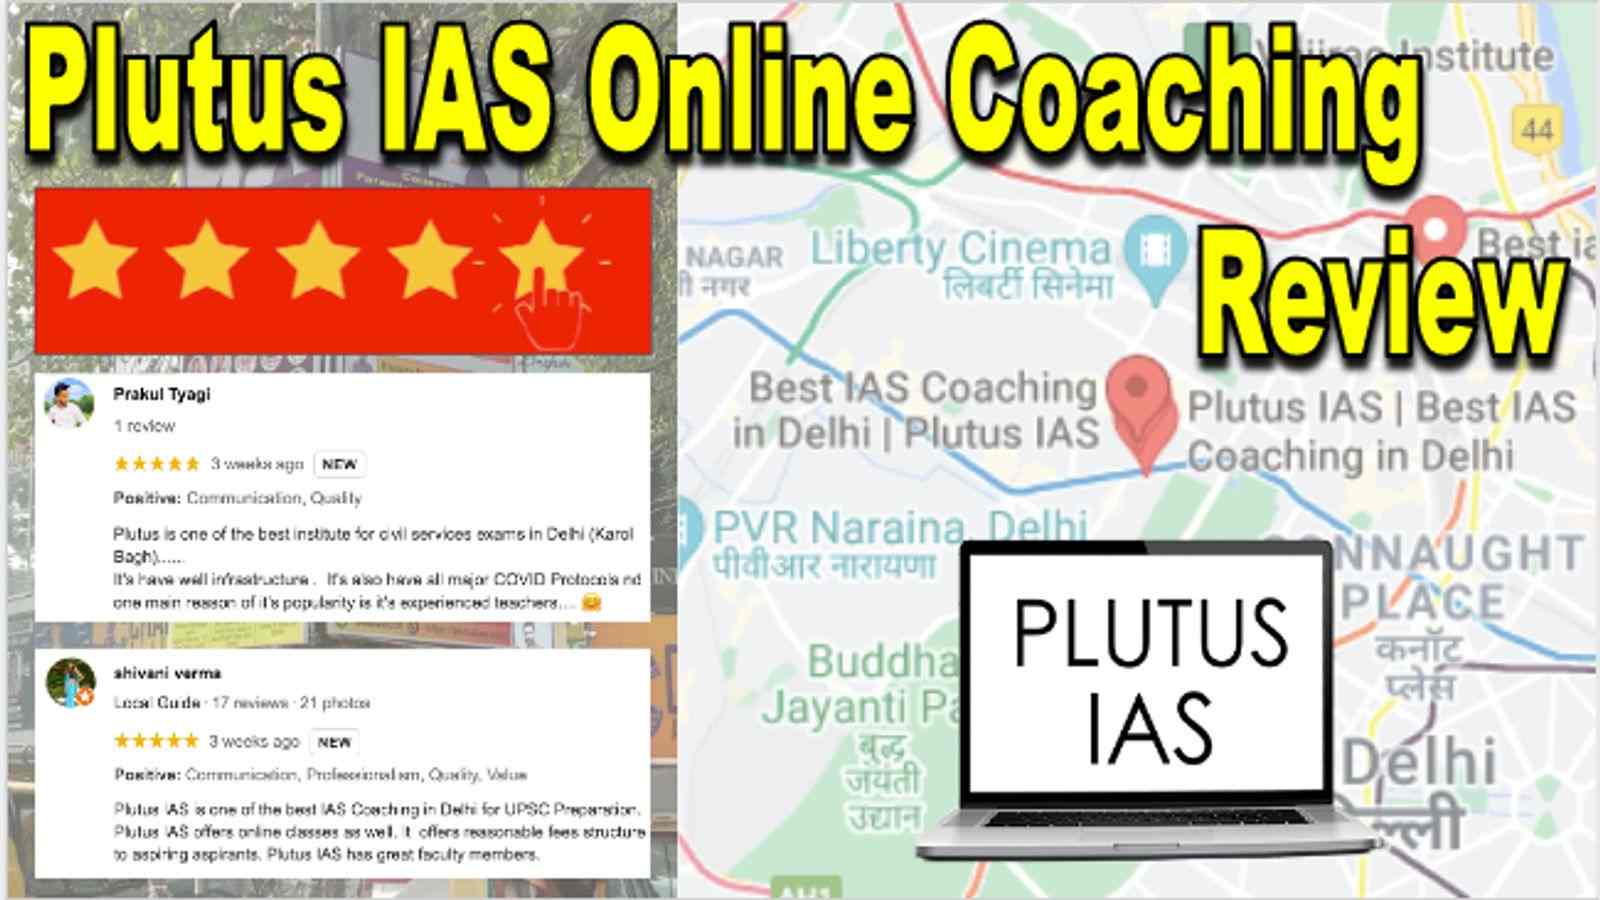 Plutus IAS Online Coaching Bangalore Review